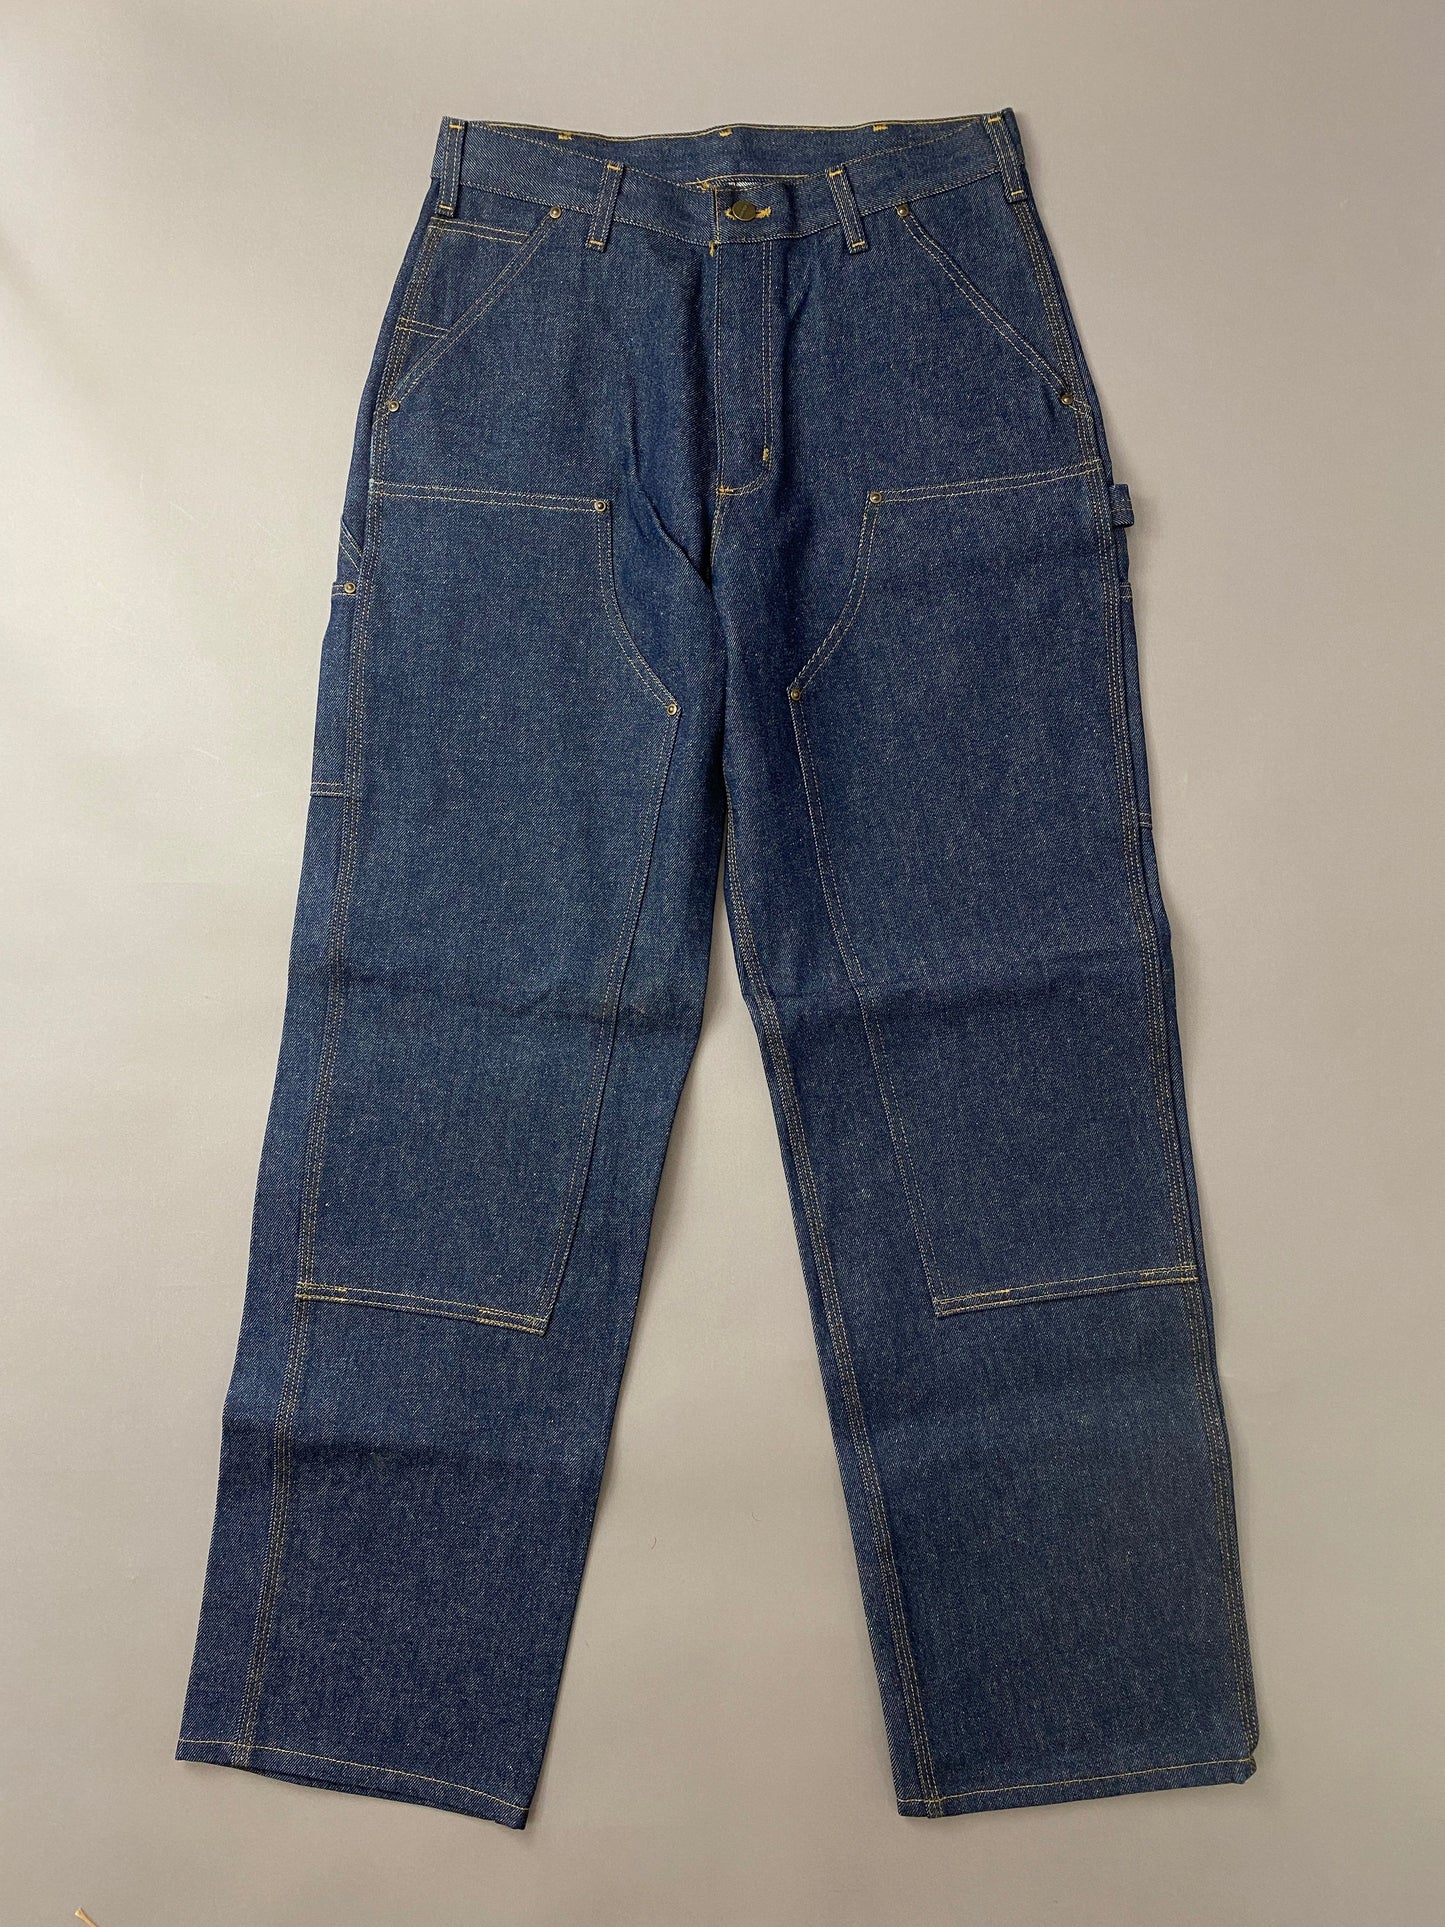 Double Knee Carhartt Jeans - 32 x 32